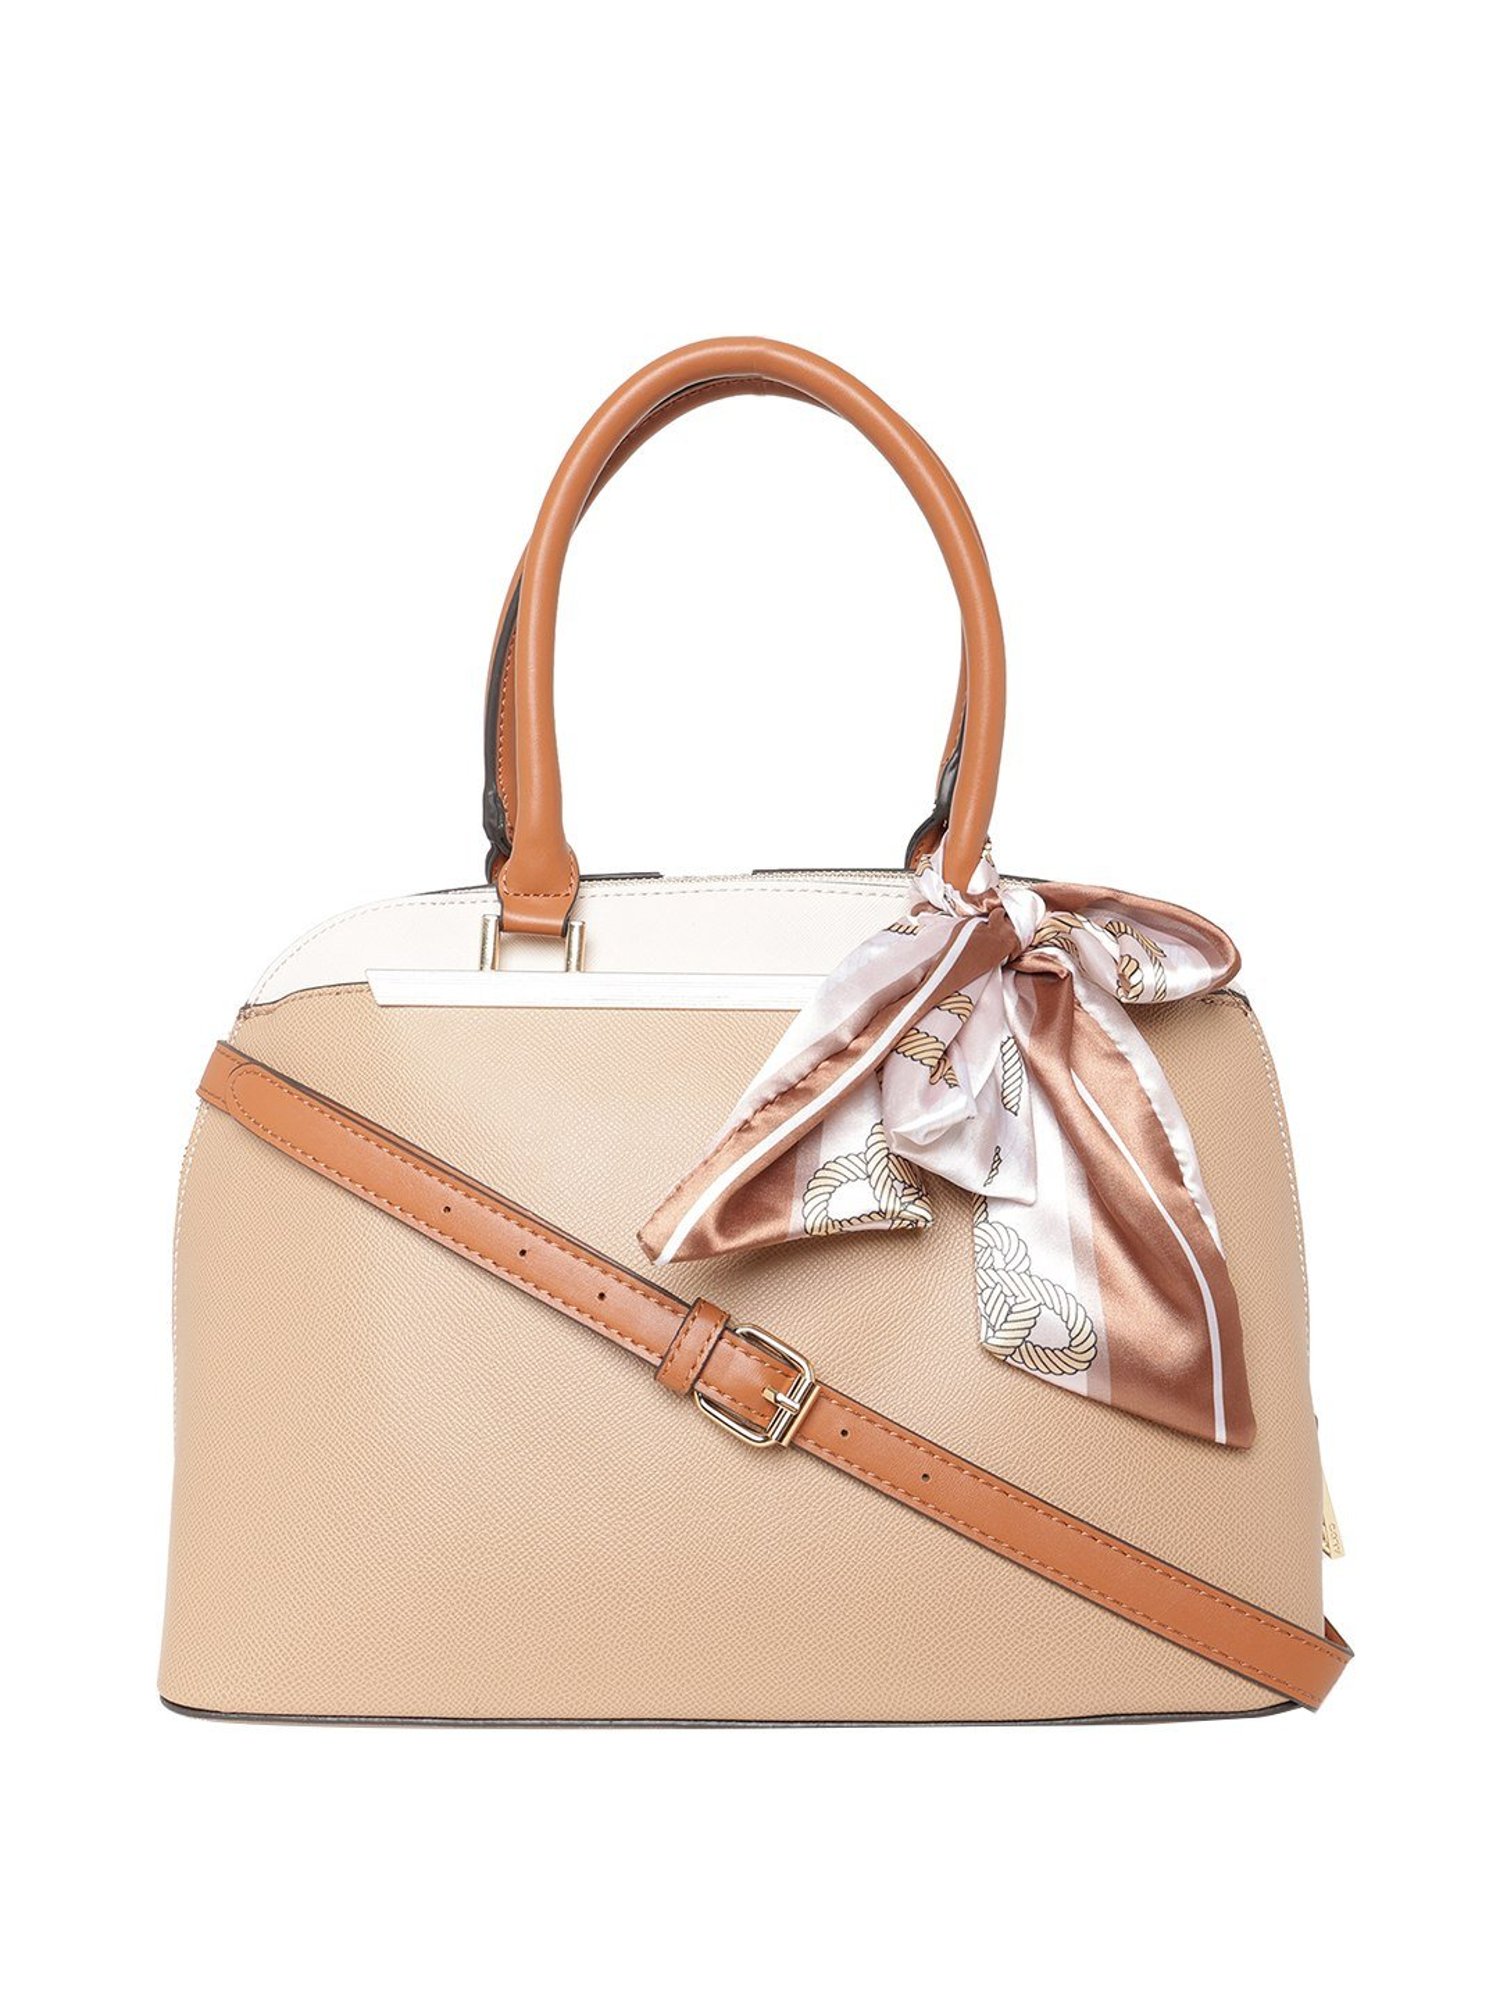 aldo top handle purse Merlot And Beige womens handbag | eBay